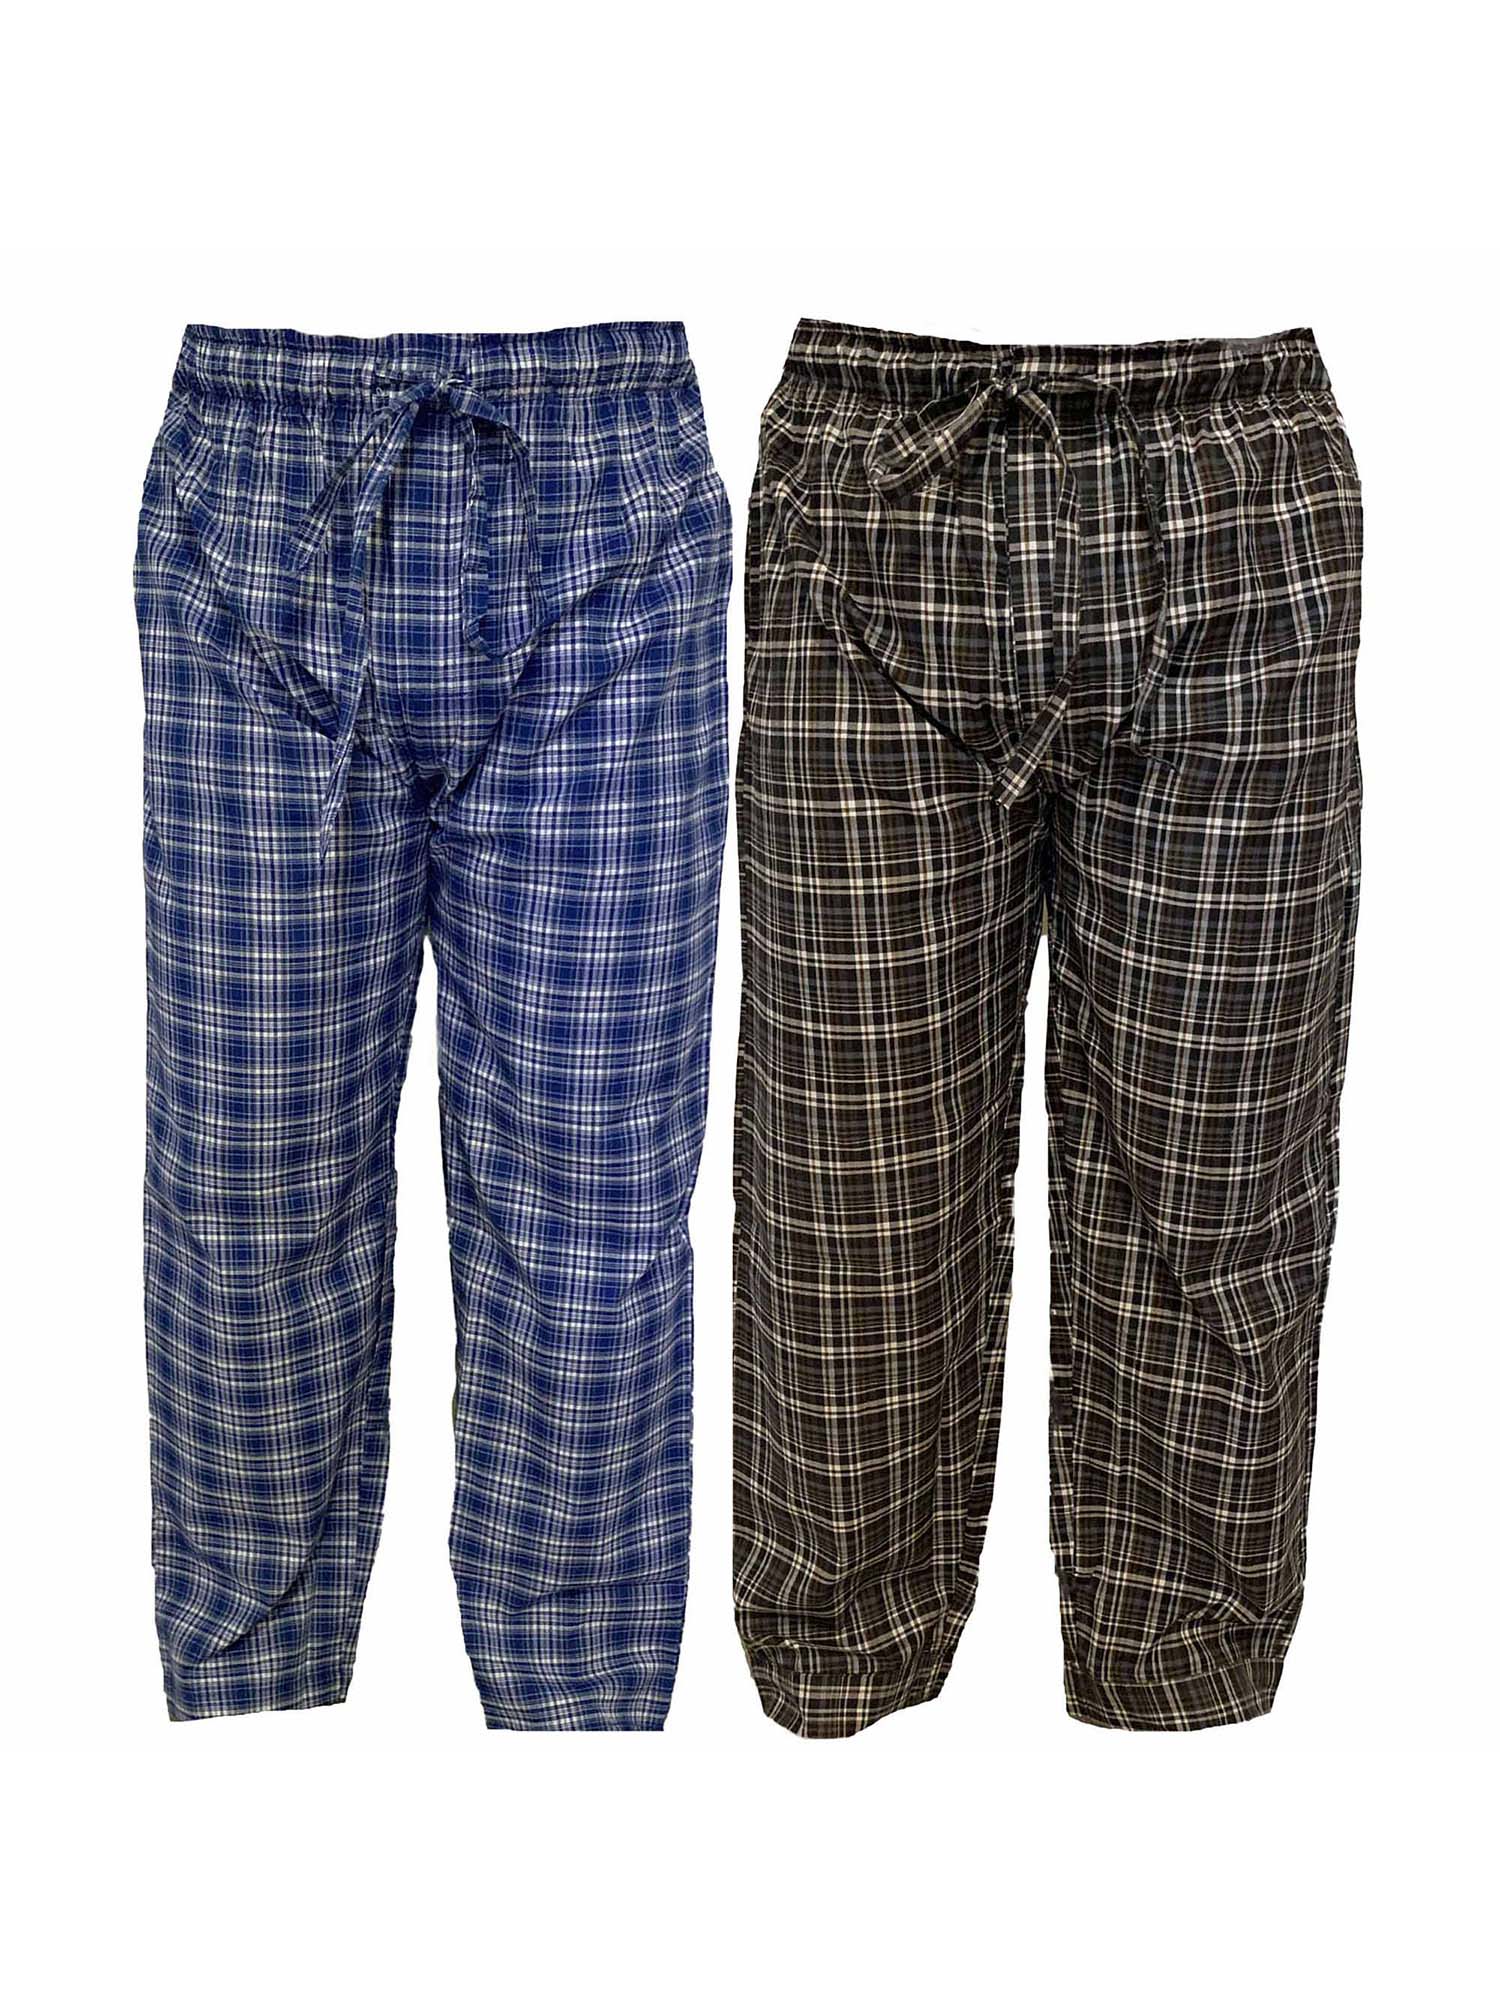 Men's Lounge Pants / Pajama Bottoms / Sleep Pants, Woven, 2-Piece Multicolor Combo